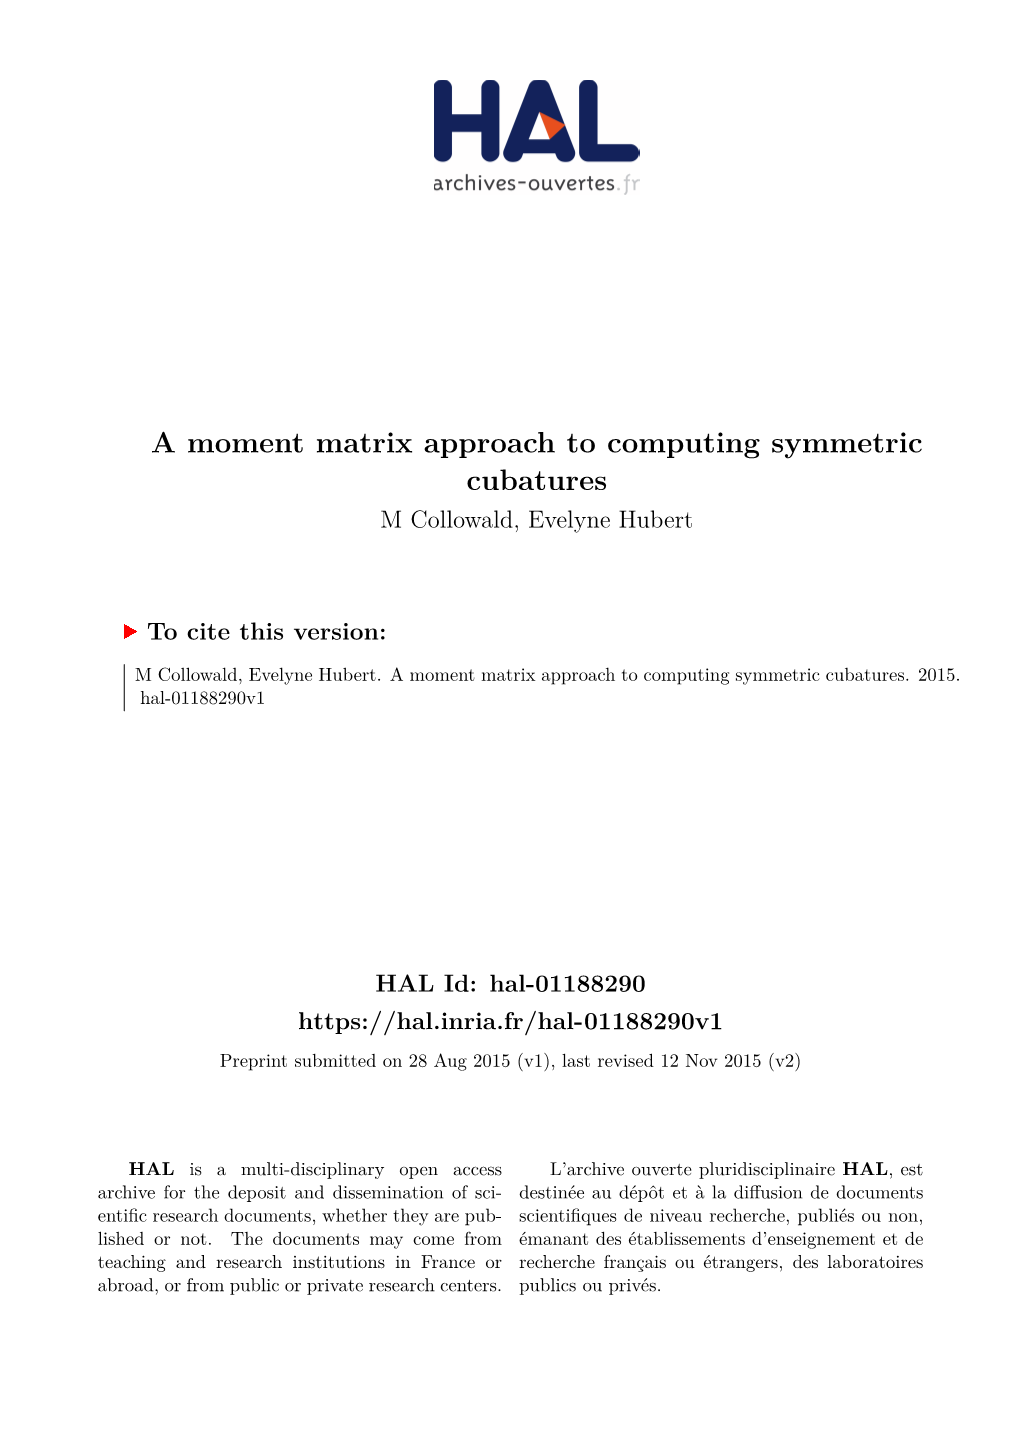 A Moment Matrix Approach to Computing Symmetric Cubatures M Collowald, Evelyne Hubert